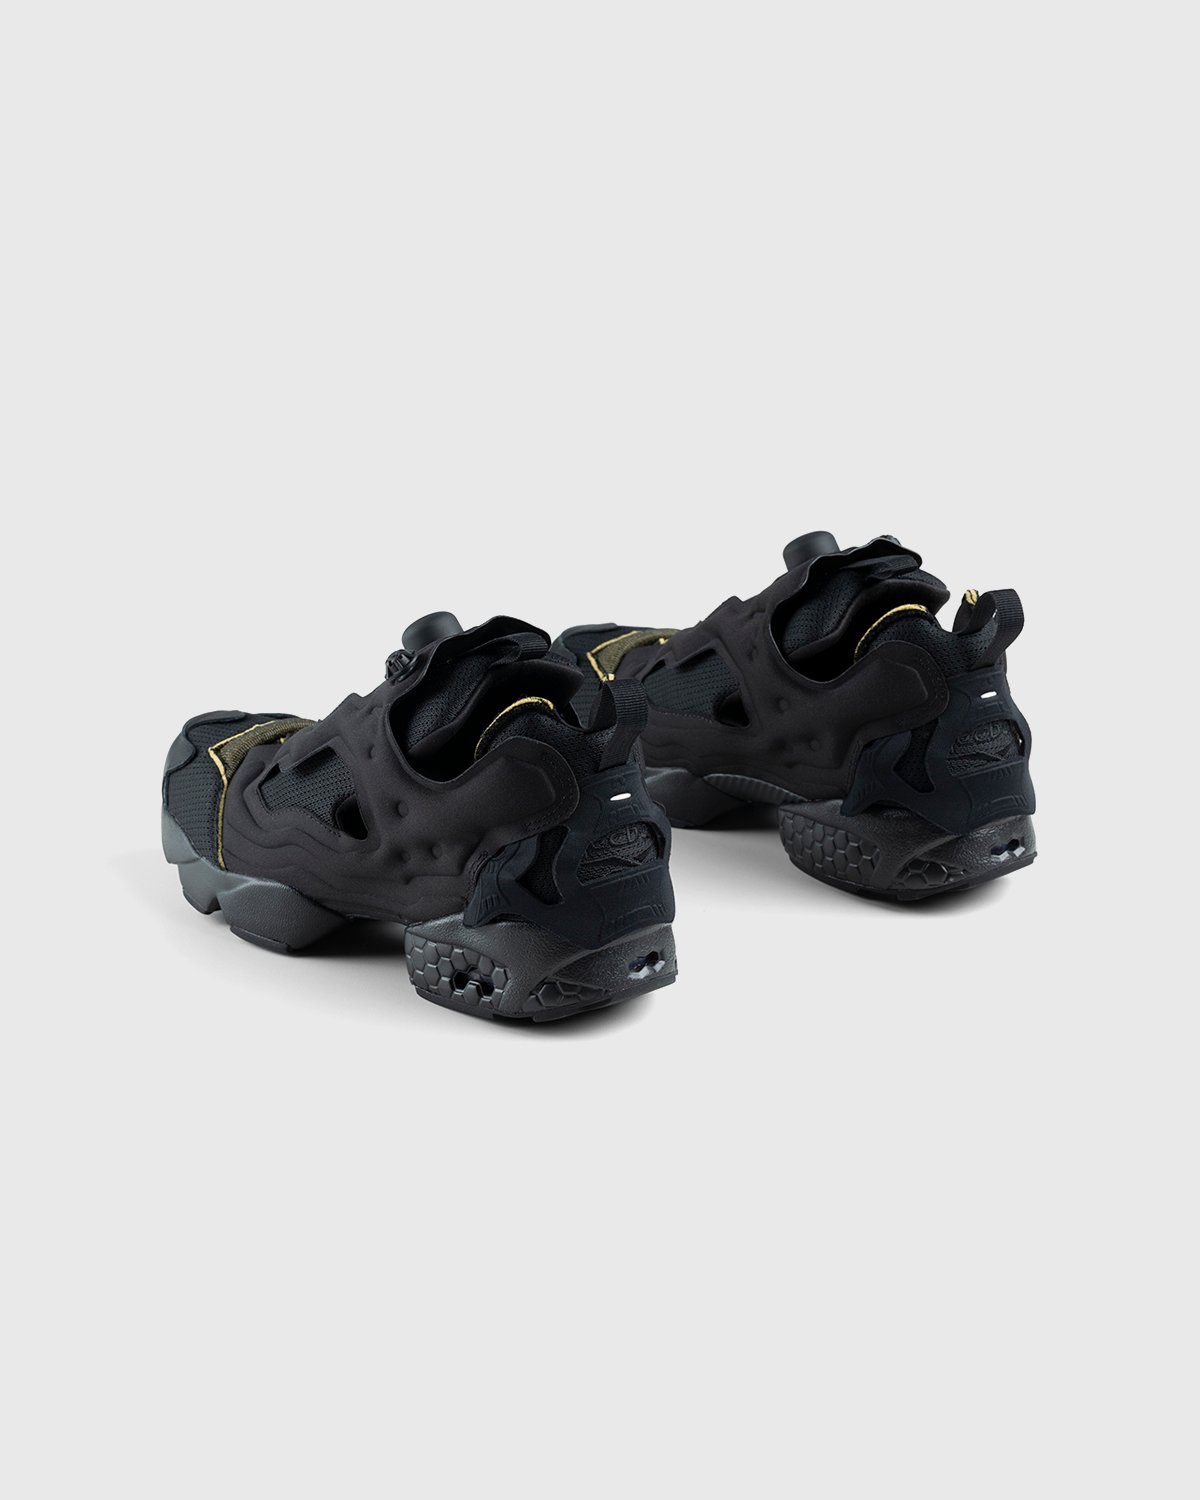 Reebok x Maison Margiela - Instapump Fury Memory Of Black - Footwear - Black - Image 4